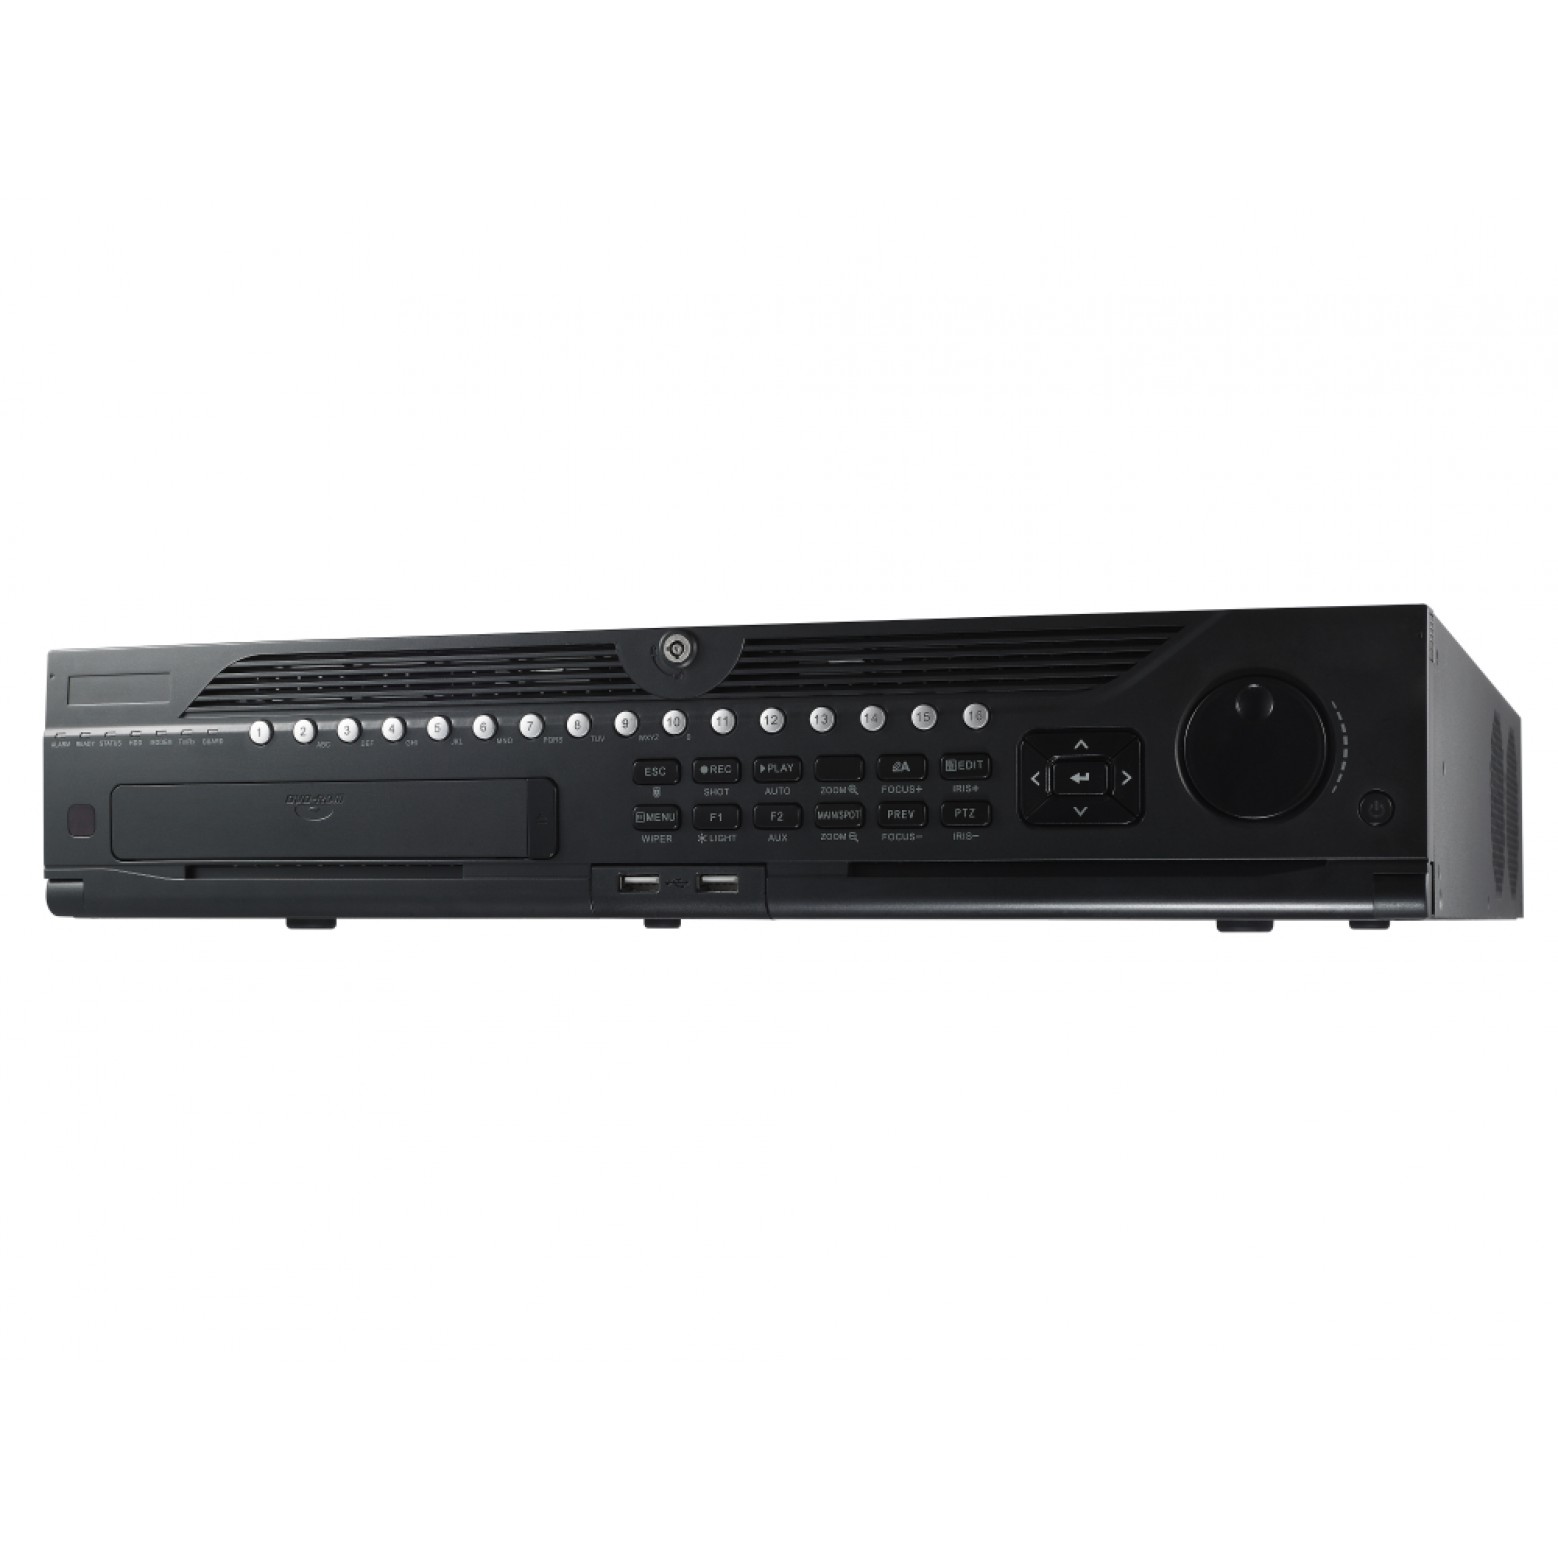 Hikvision DS-9664NI-I8 netwerk video recorder - 64 x IP kanalen - RAID - 4K